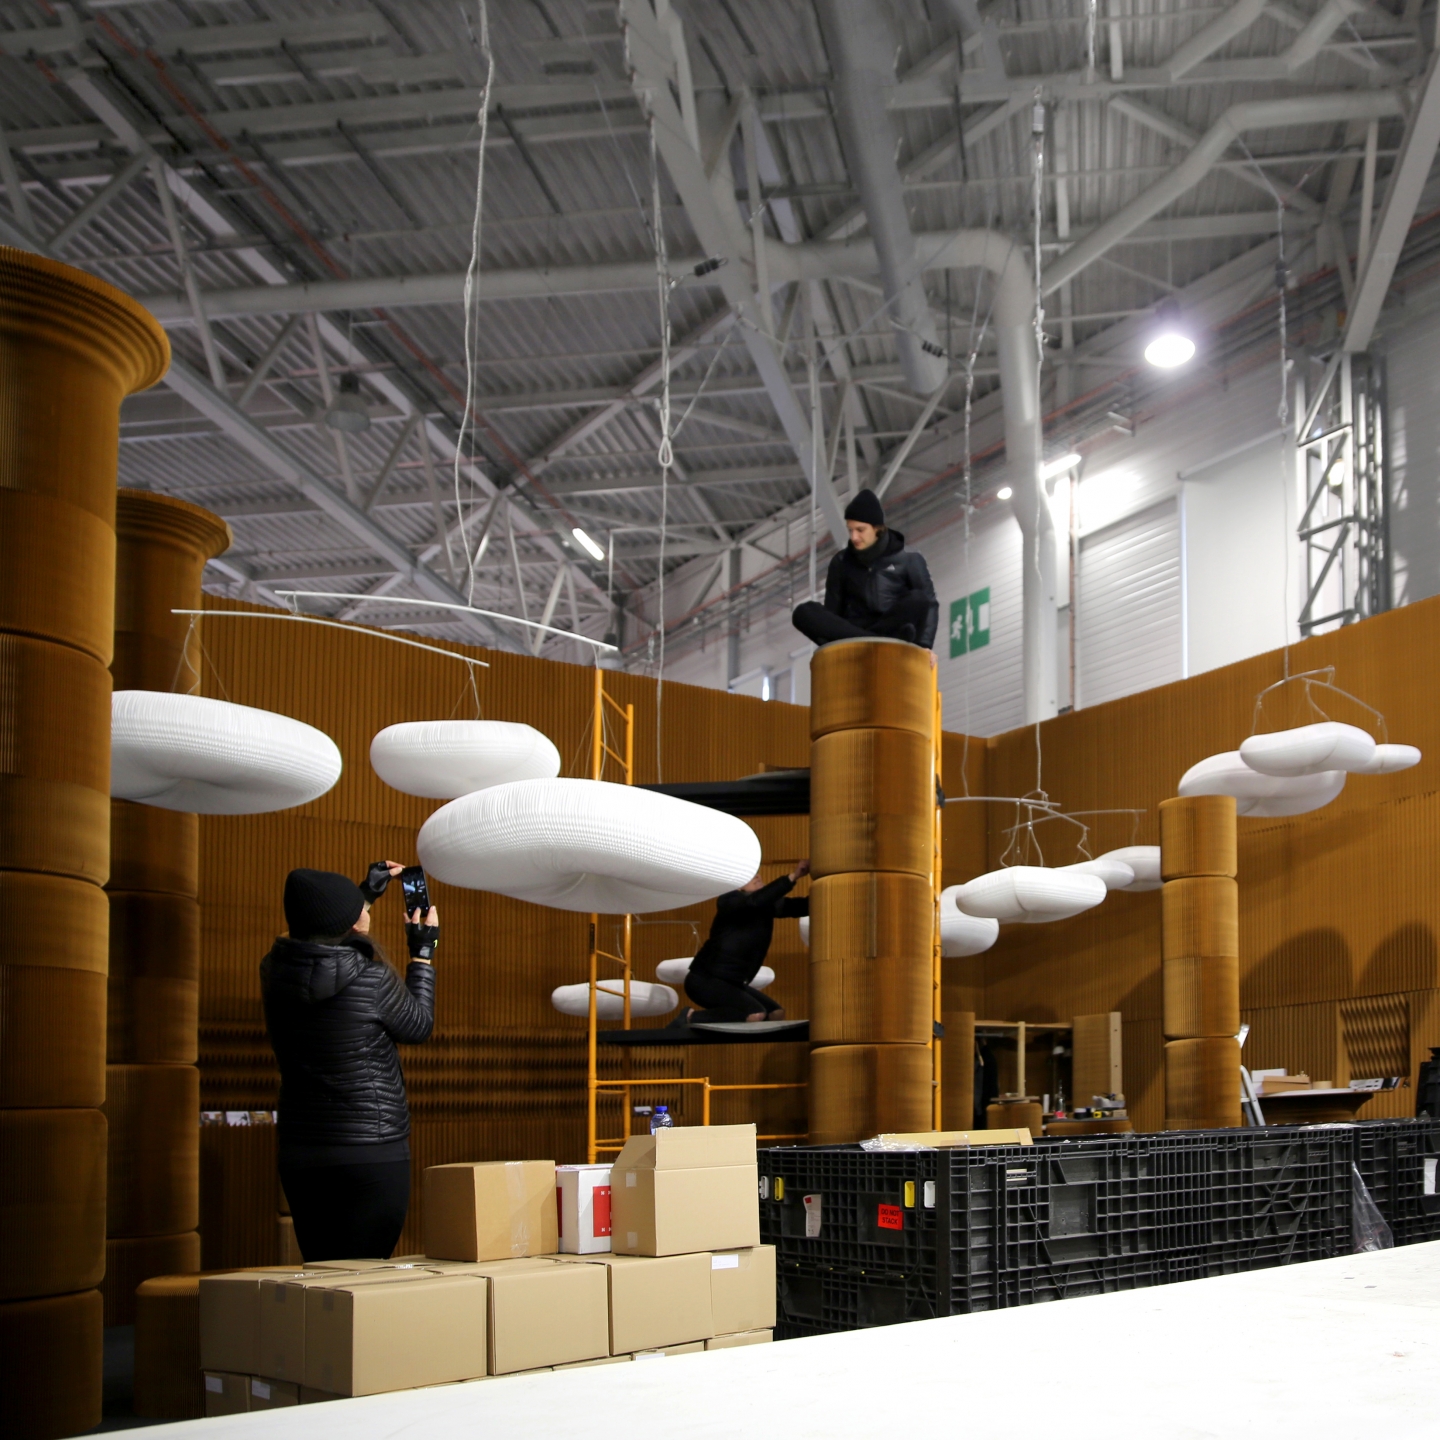 molo's installation at Maison & Objet 2016 - modular paper furniture by molo